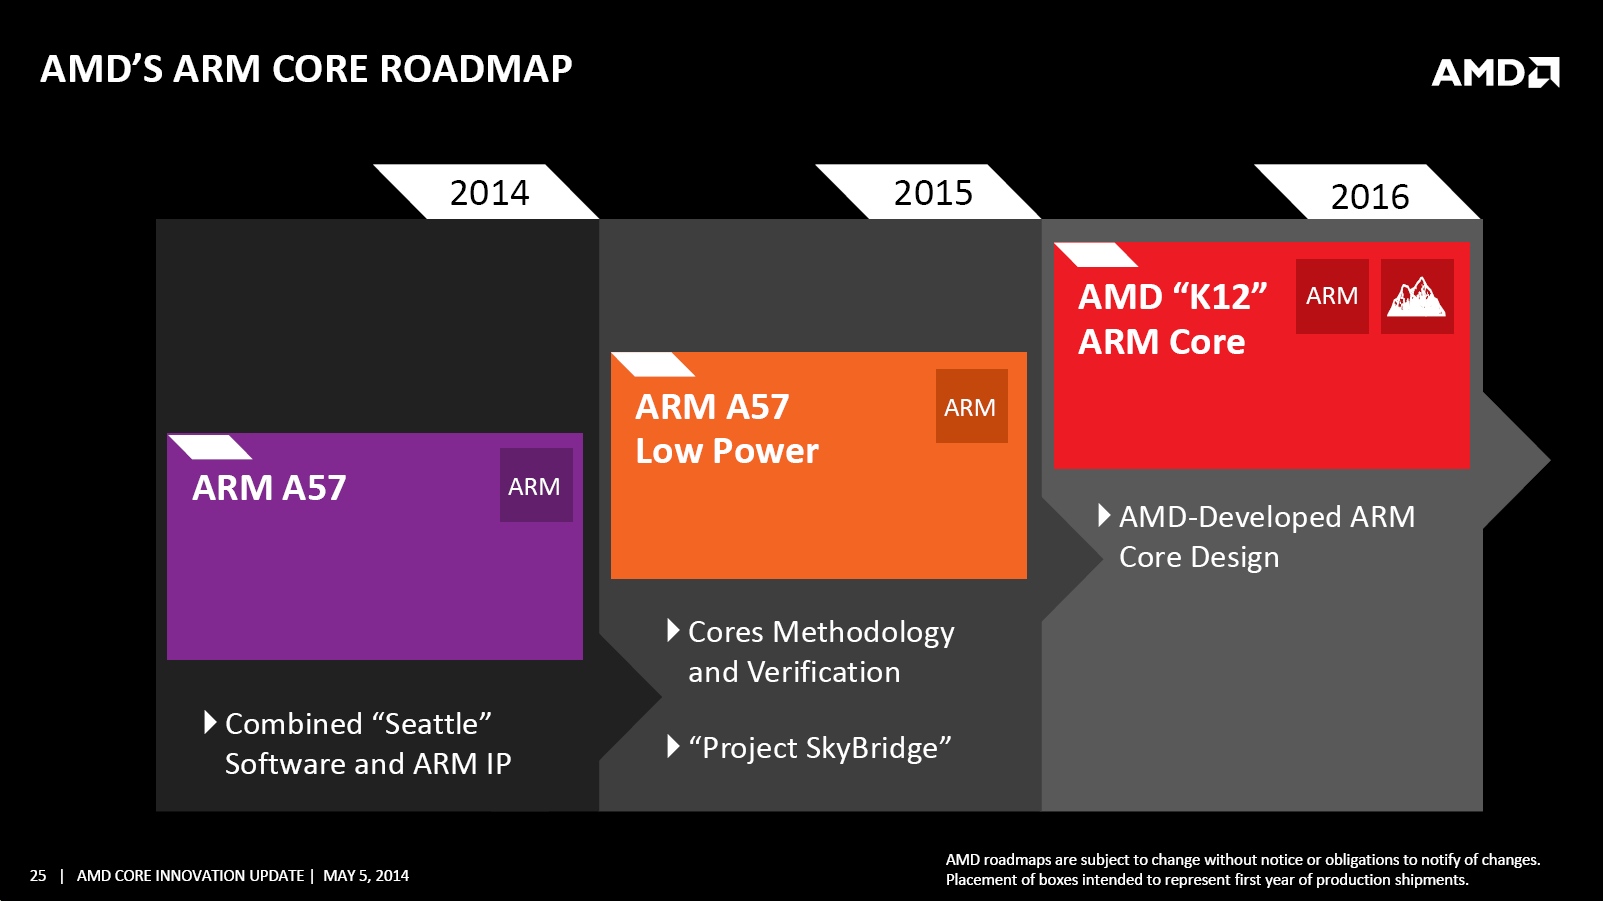 Risorsa grafica - foto, screenshot o immagine in genere - relativa ai contenuti pubblicati da amdzone.it | Nome immagine: news21164_AMD-Core-Innovation-Update_3.jpg